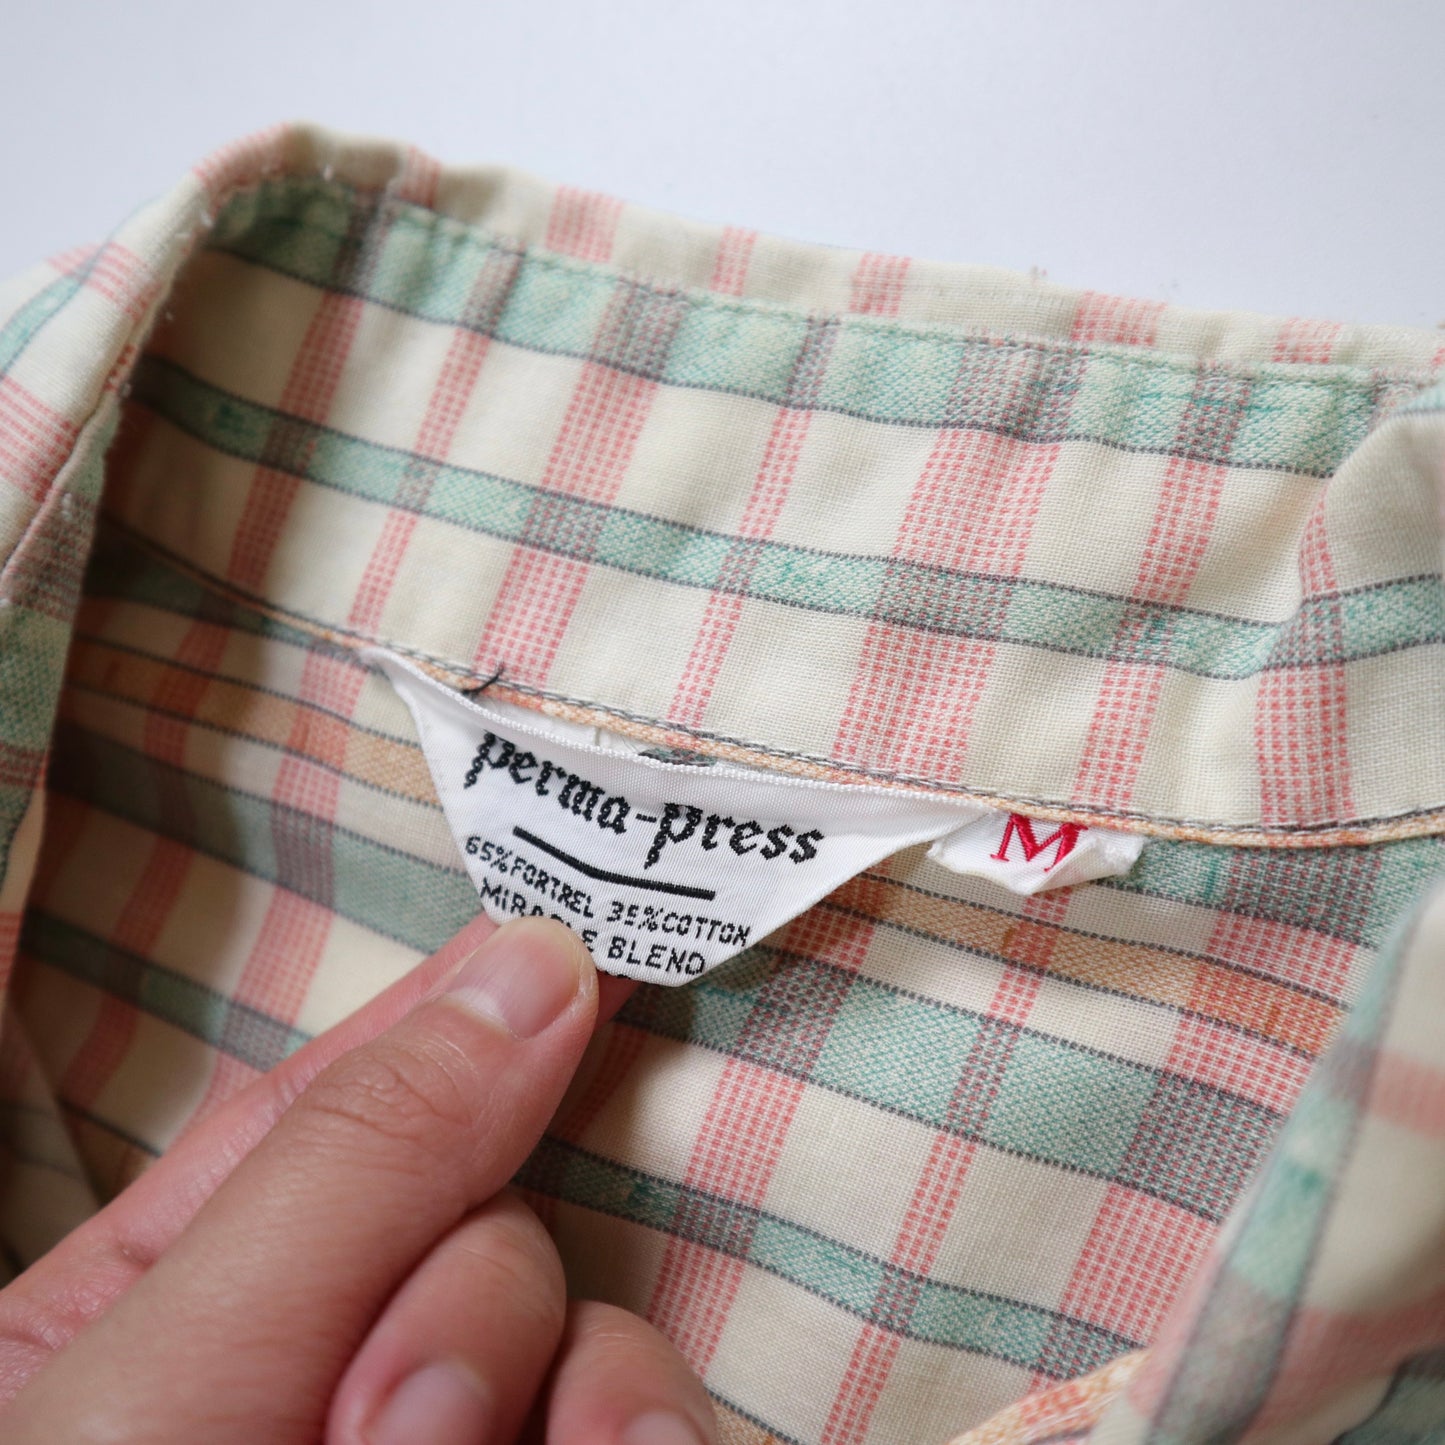 1970s Perma-Press green and pink plaid arrow collar shirt